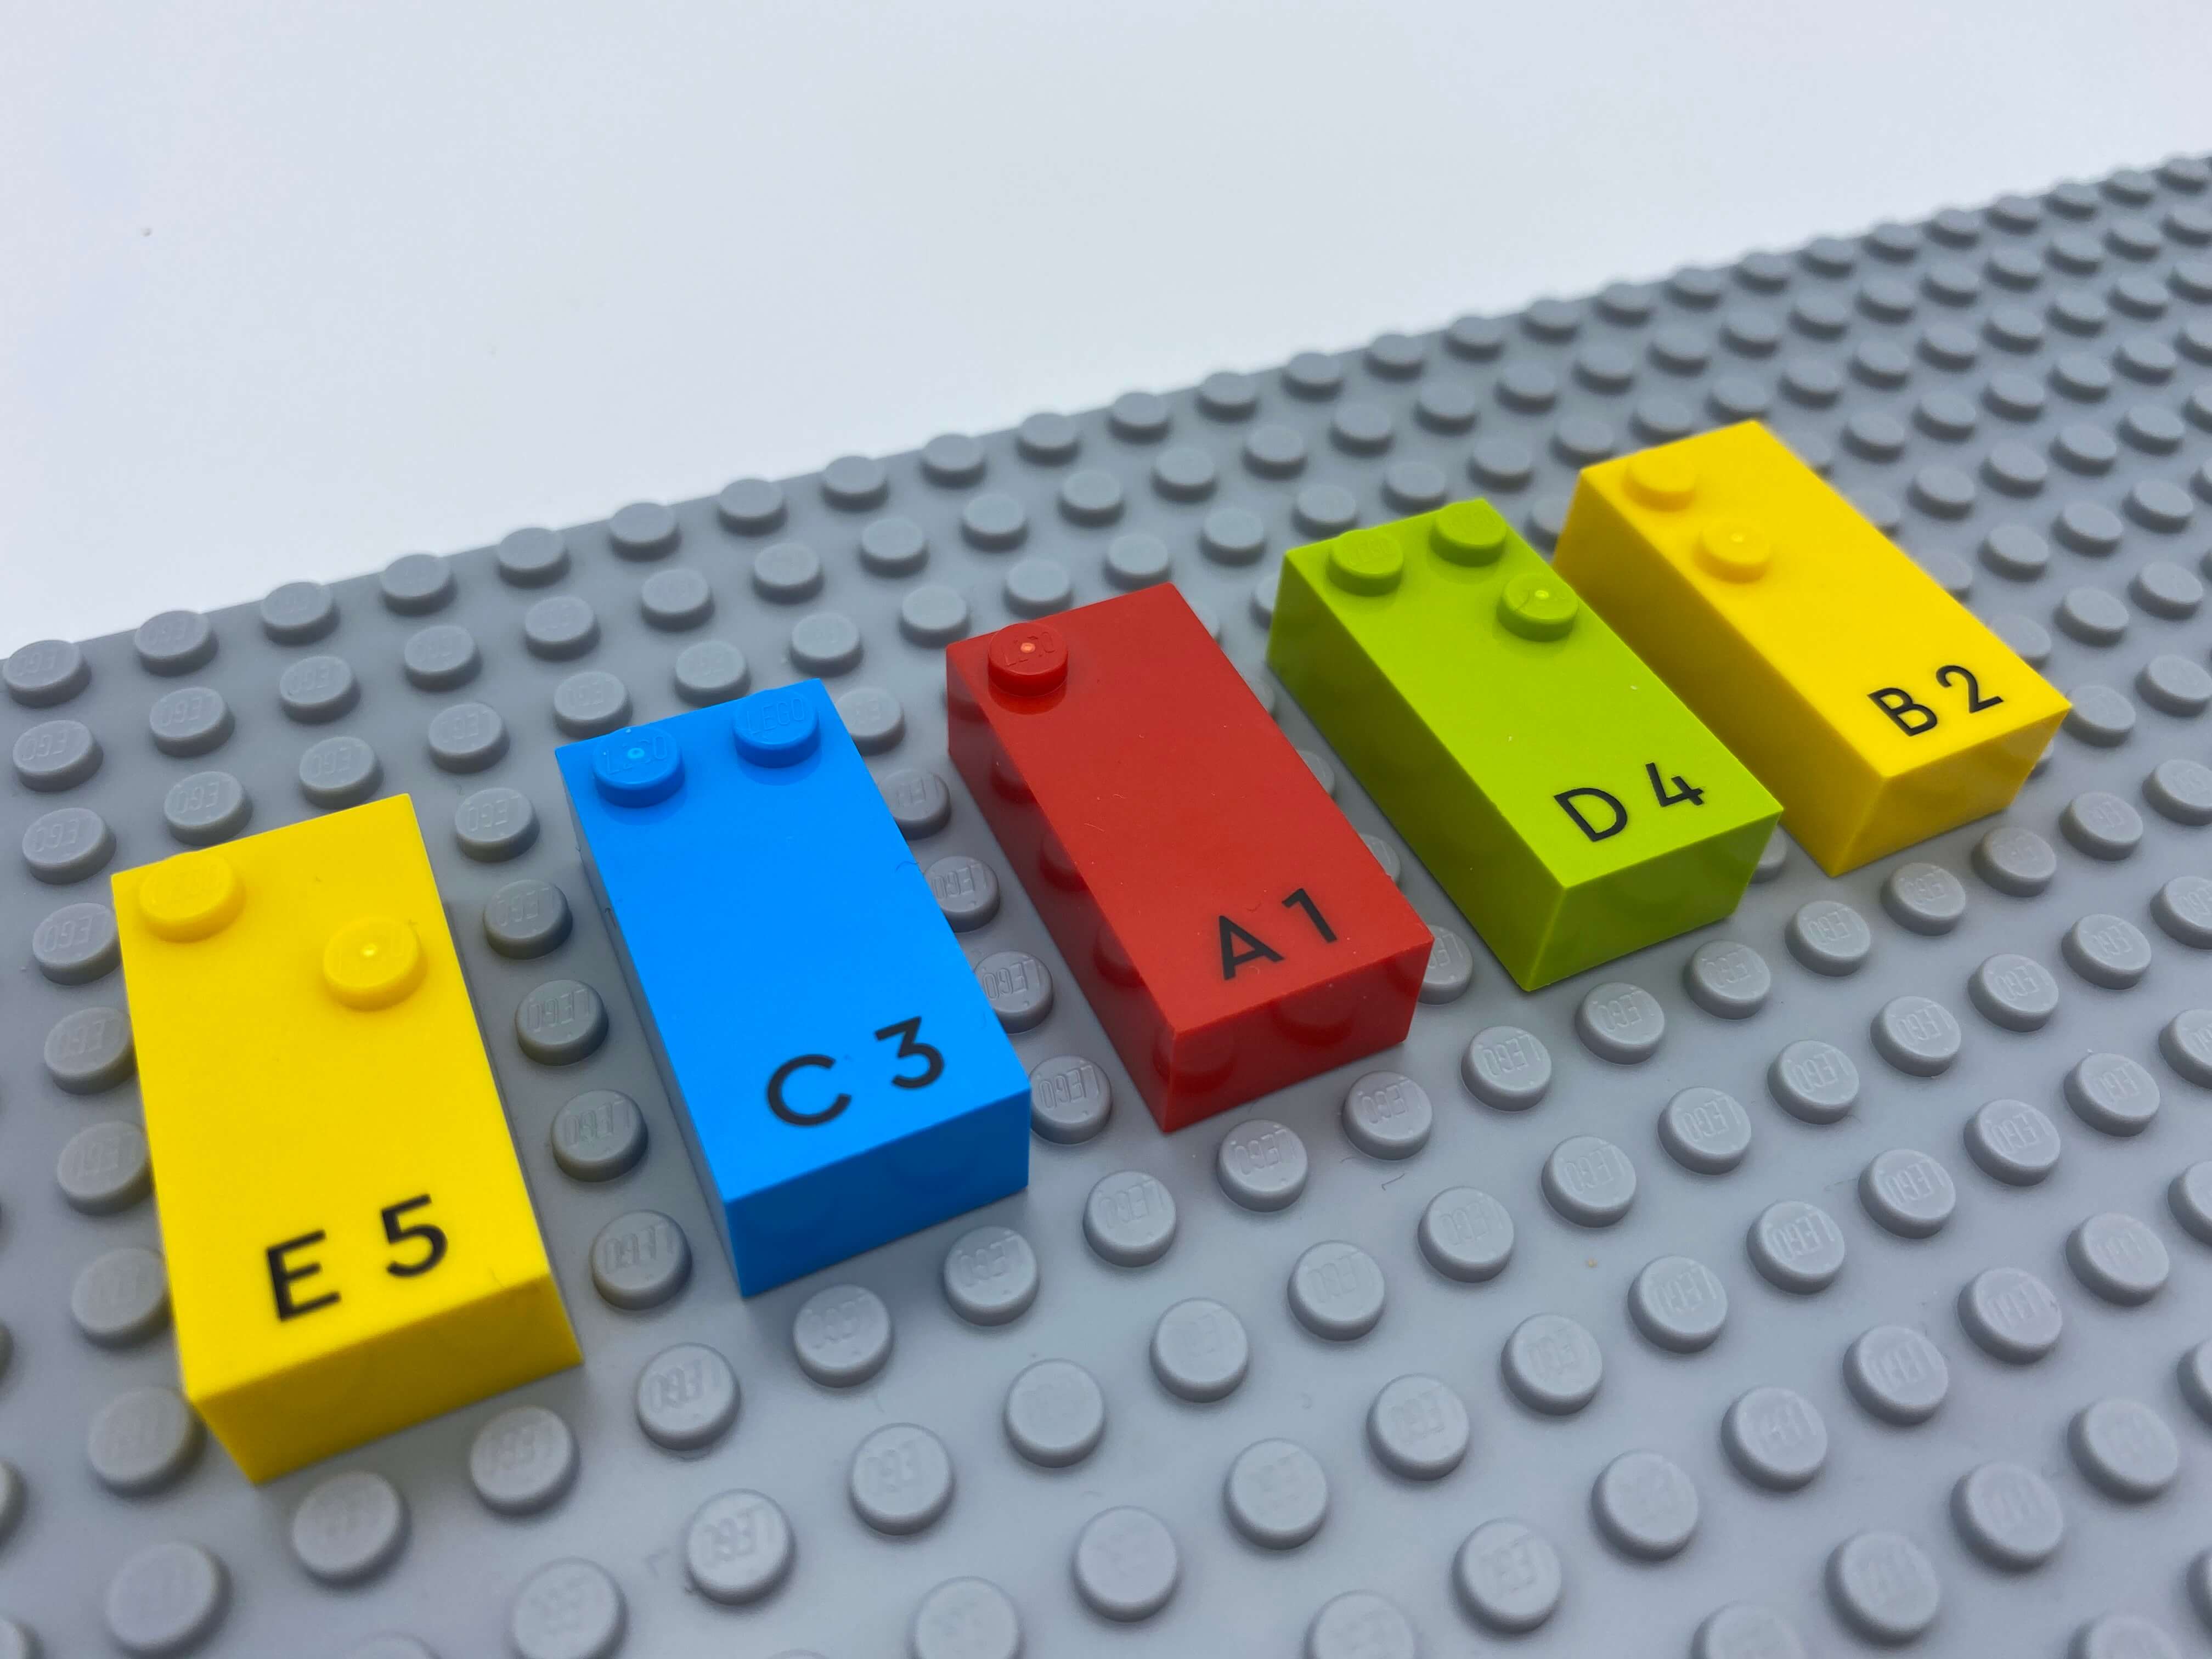 5 letter bricks aligned on the base plate: e, c, a, d, b.